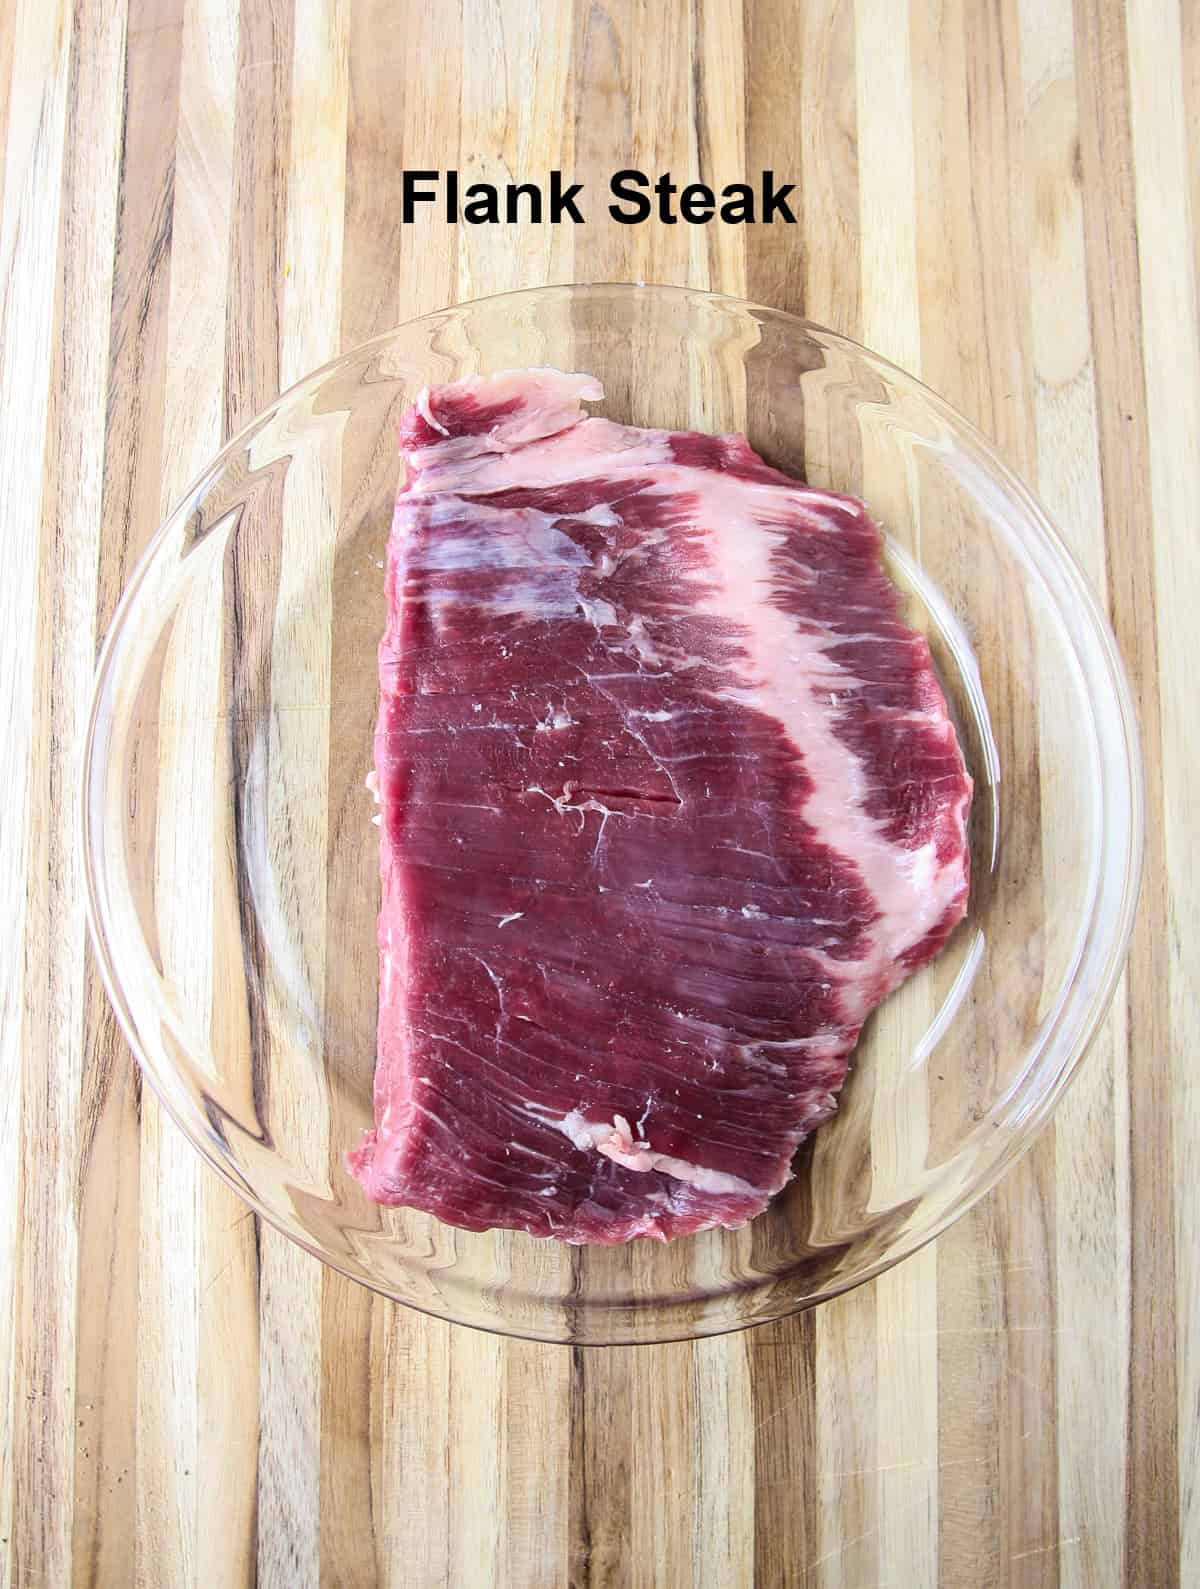 A raw flank steak on a glass plate.